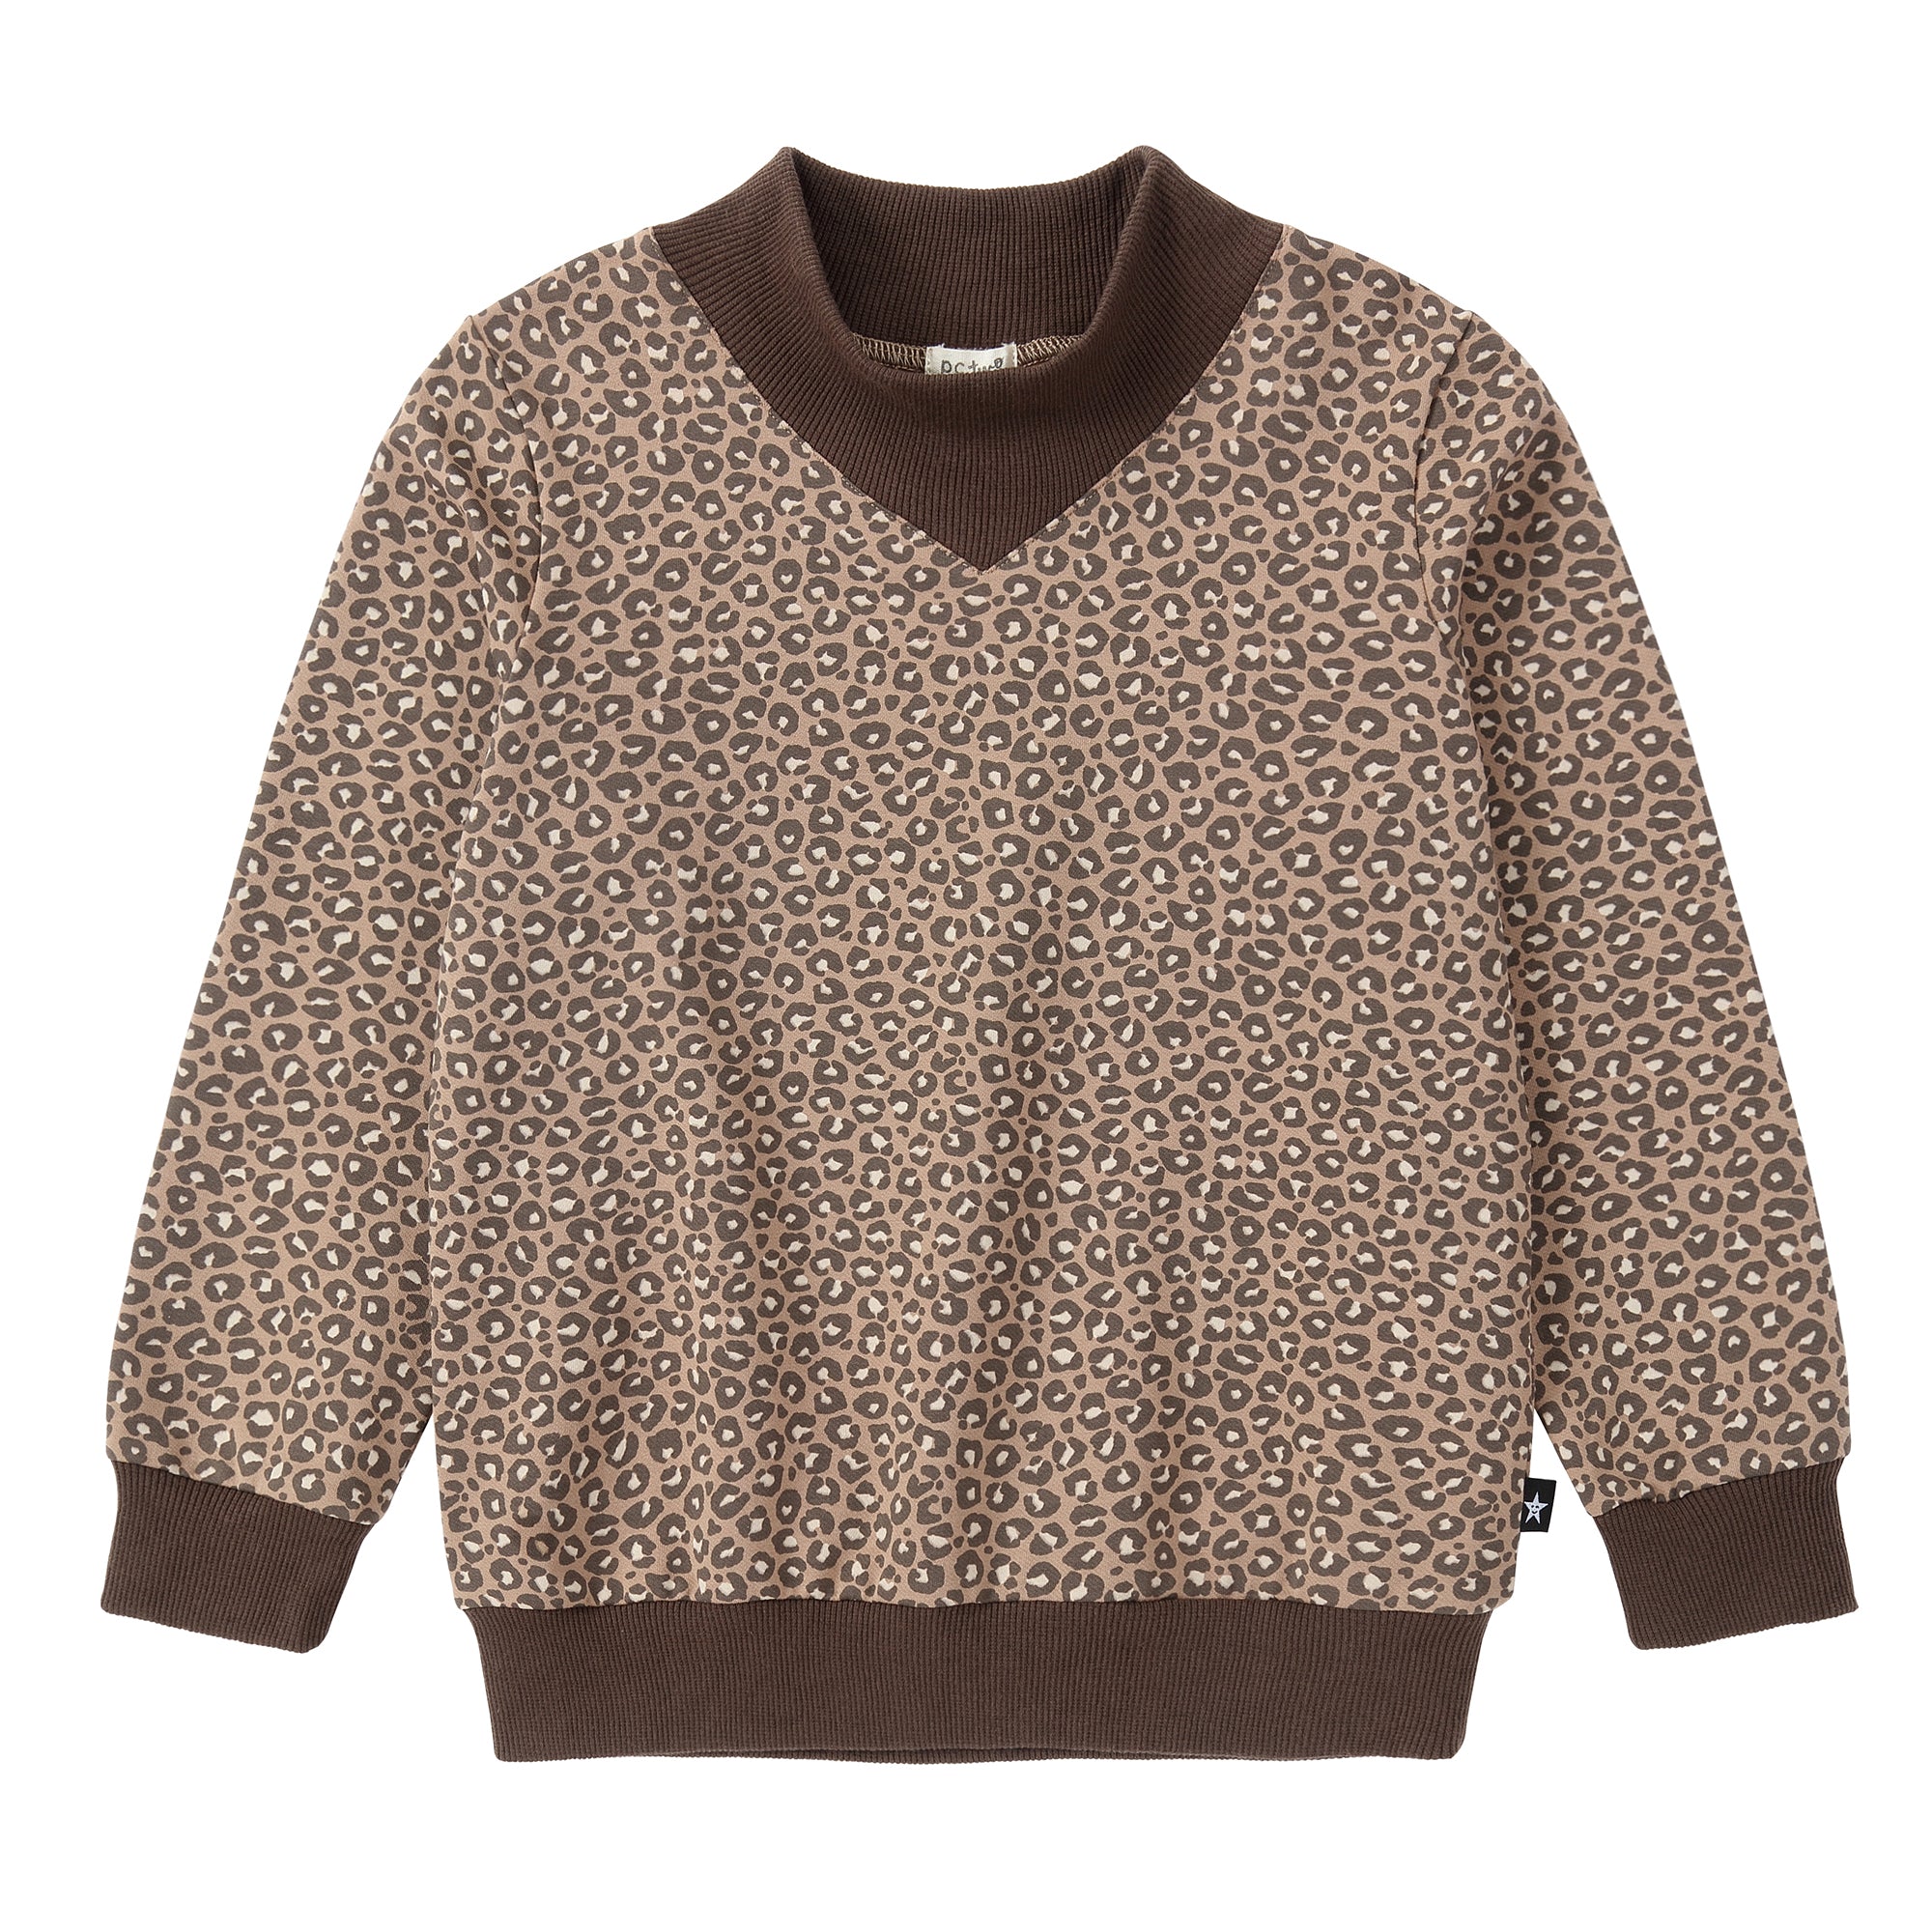 Cheetah Print Sweatshirt With Pointed Mock Neck